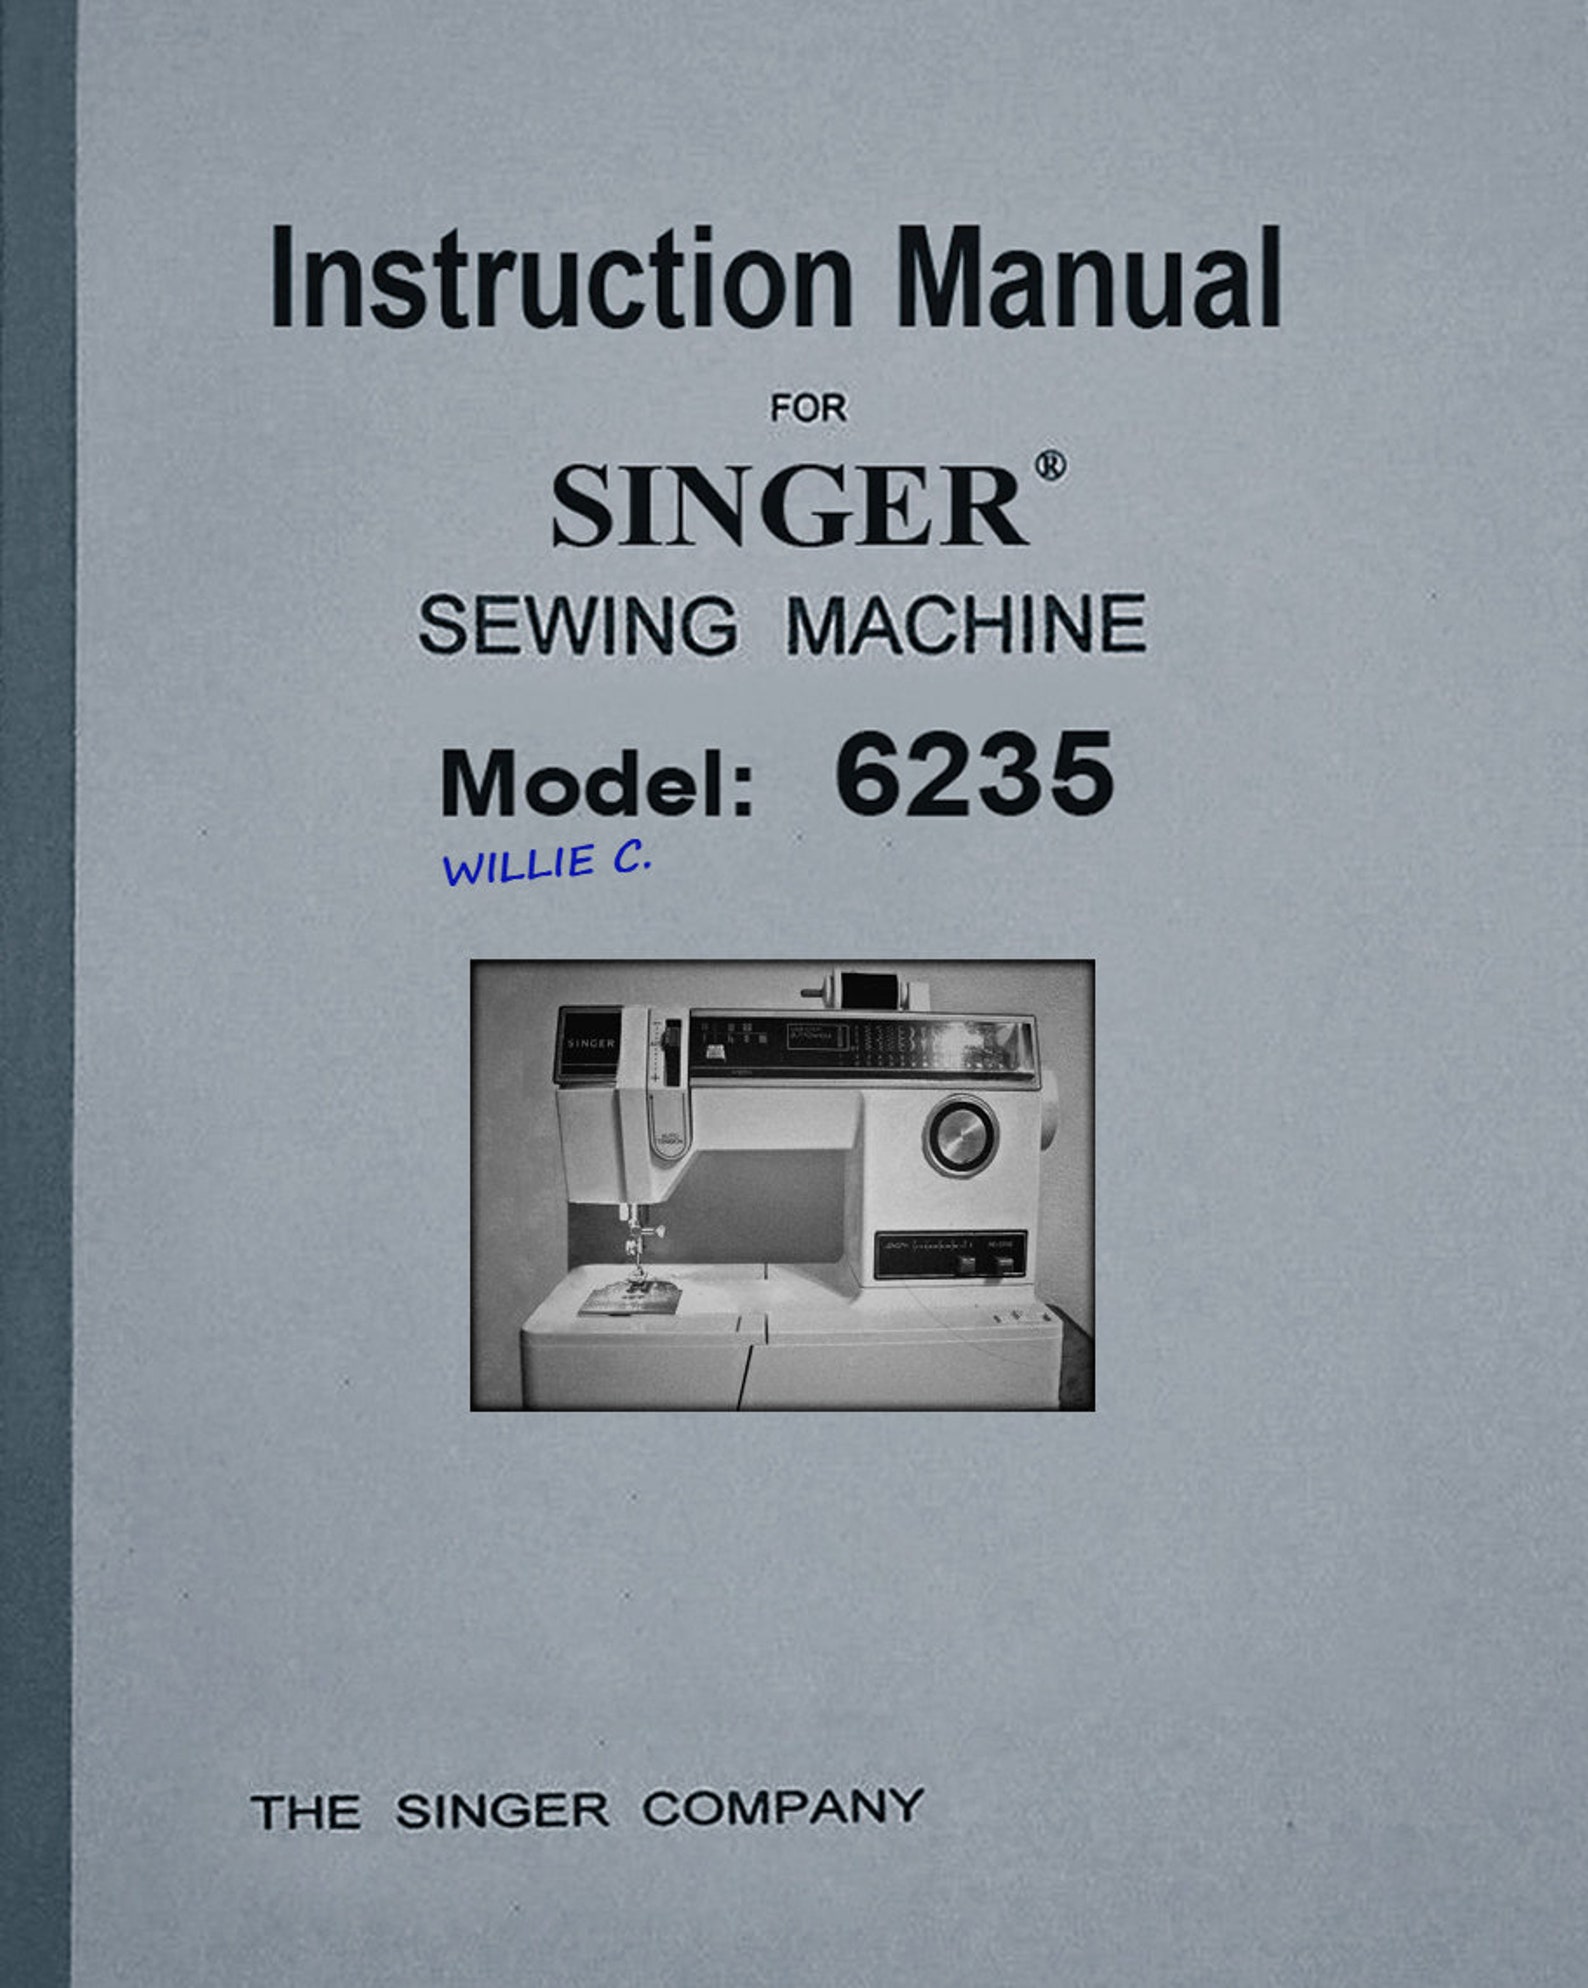 Singer model: 6235 Sewing Machine _Instruction Manual | Etsy